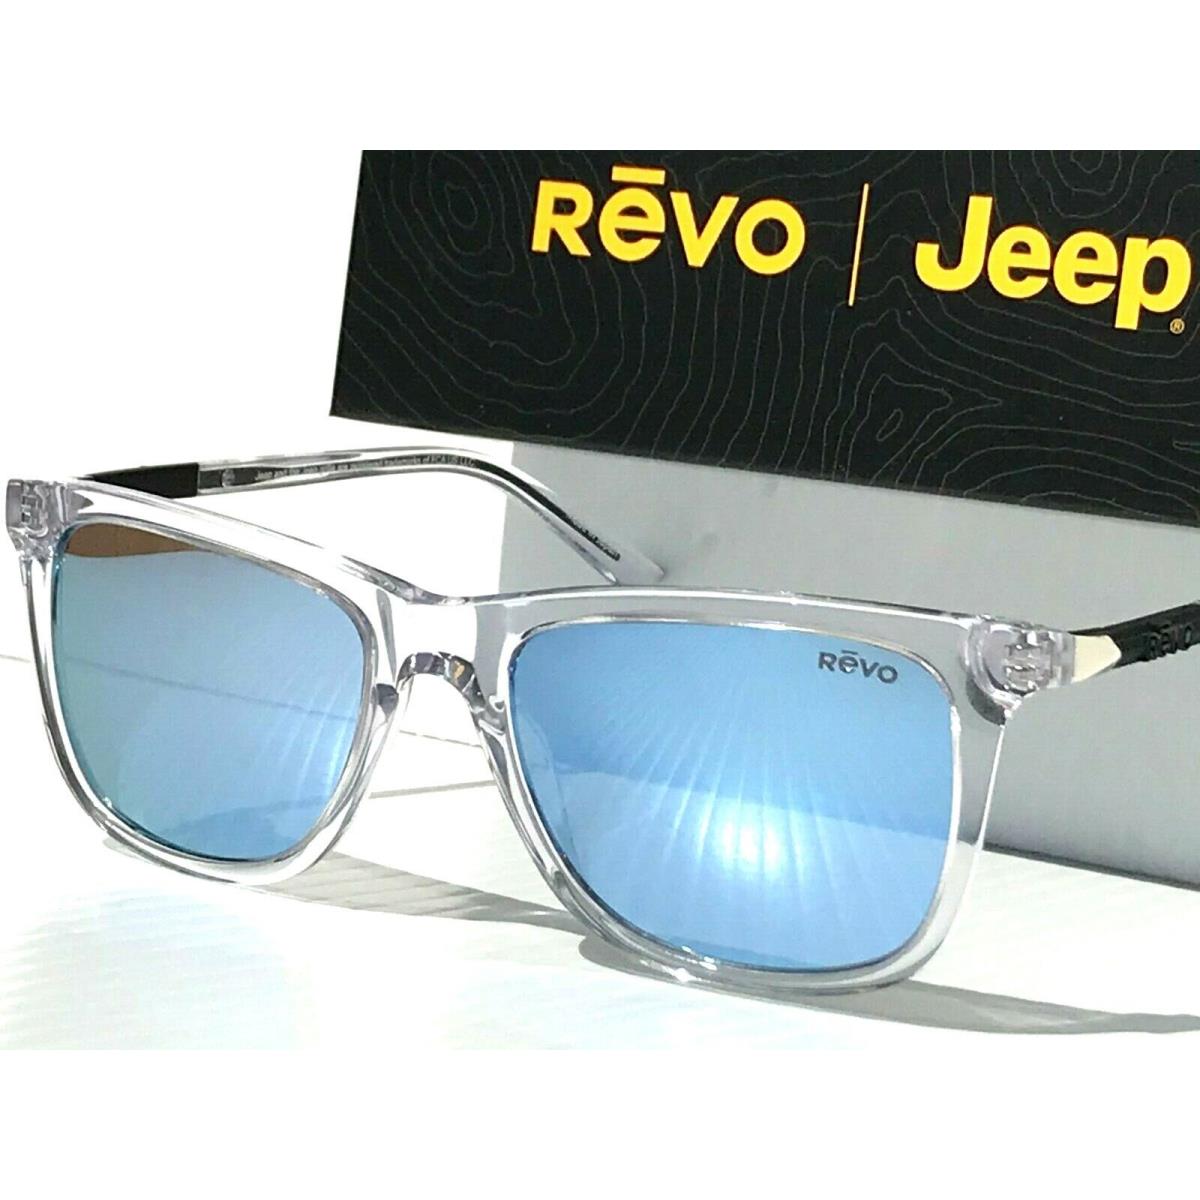 Revo sunglasses JEEP COVE - Clear Frame, Blue Lens